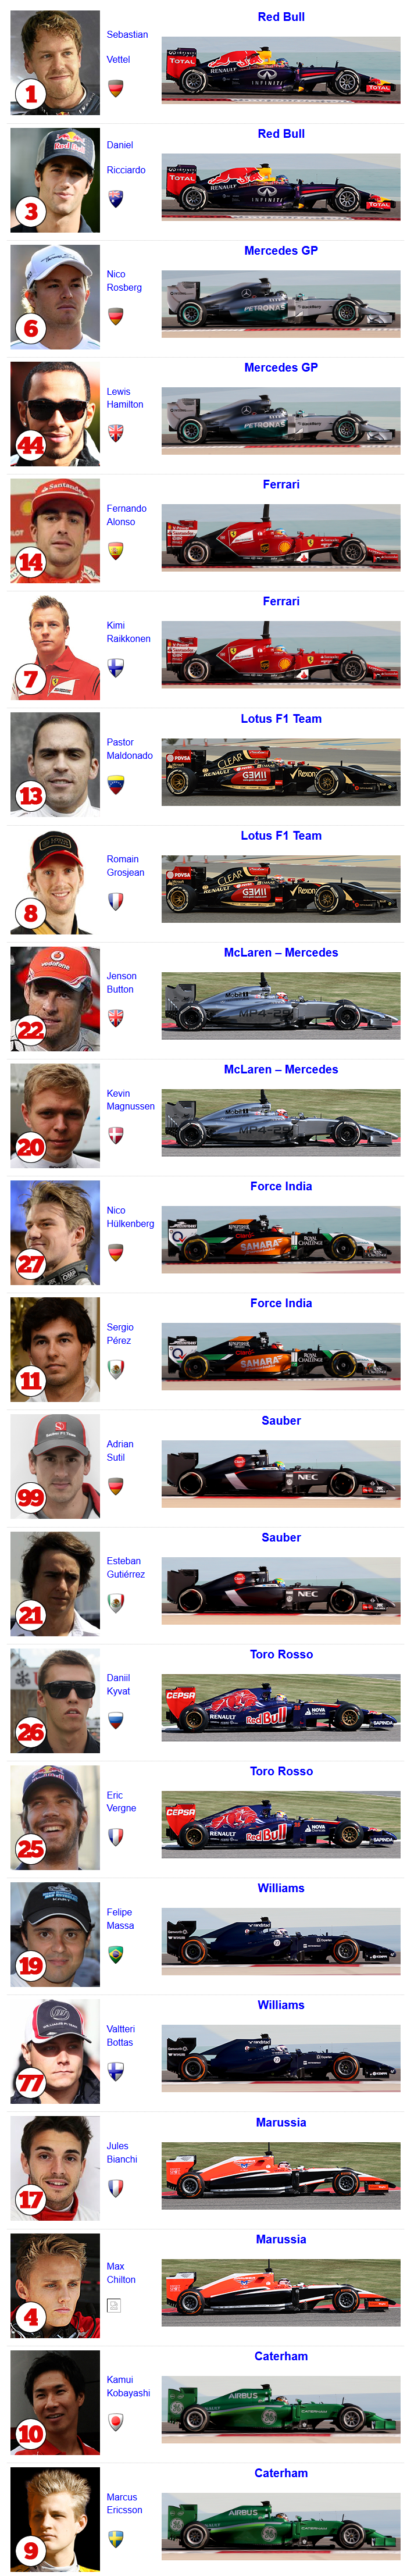 Echipe si piloti Formula 1 2014